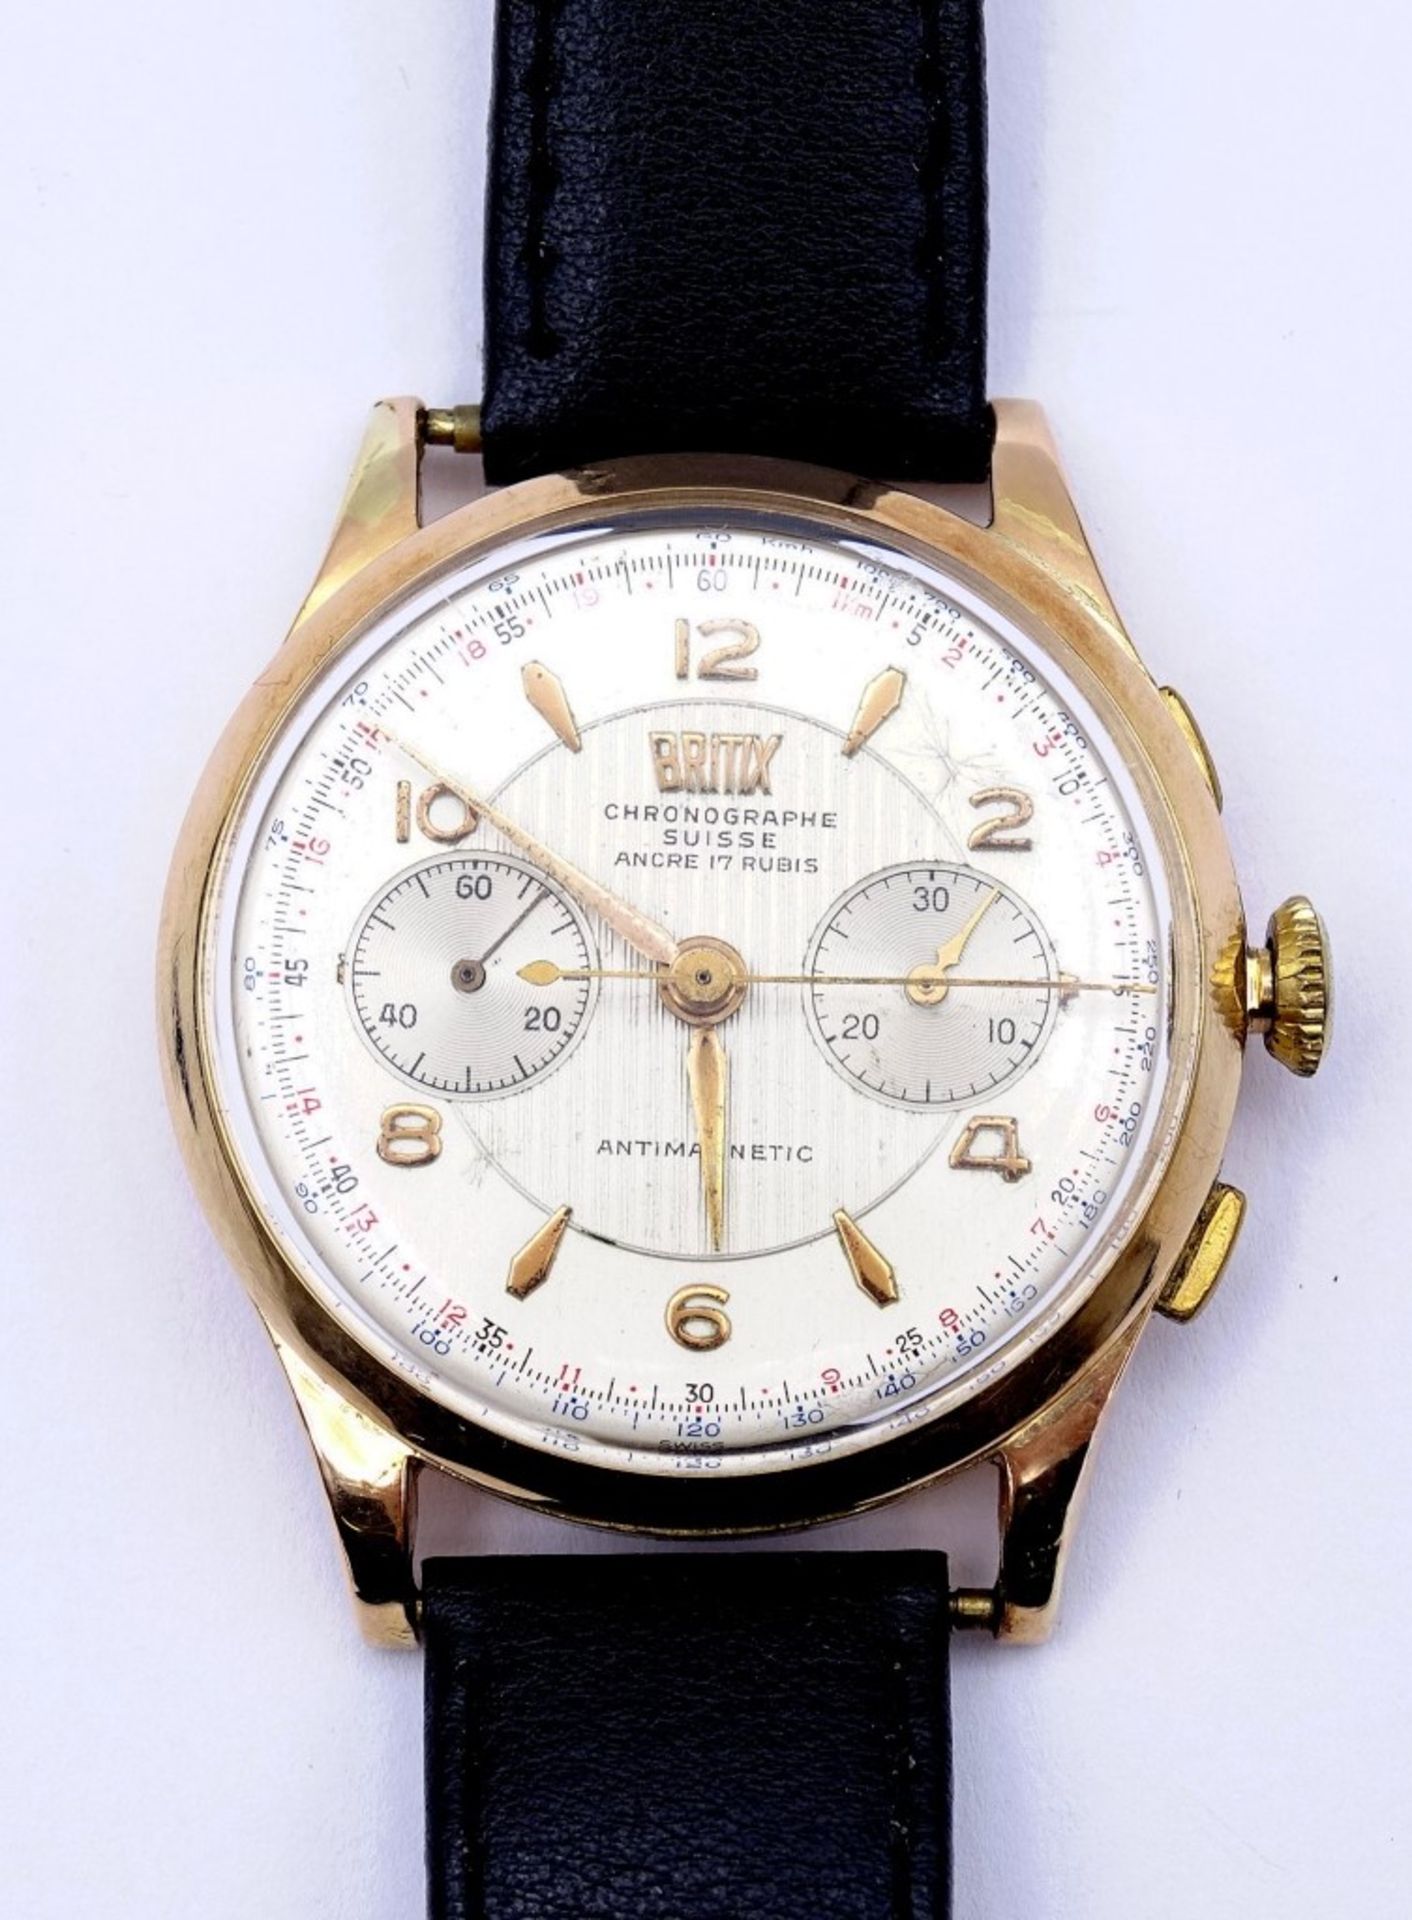 Herren Armbanduhr "Chronographe Suisse Britix",Gold 0.750 18K